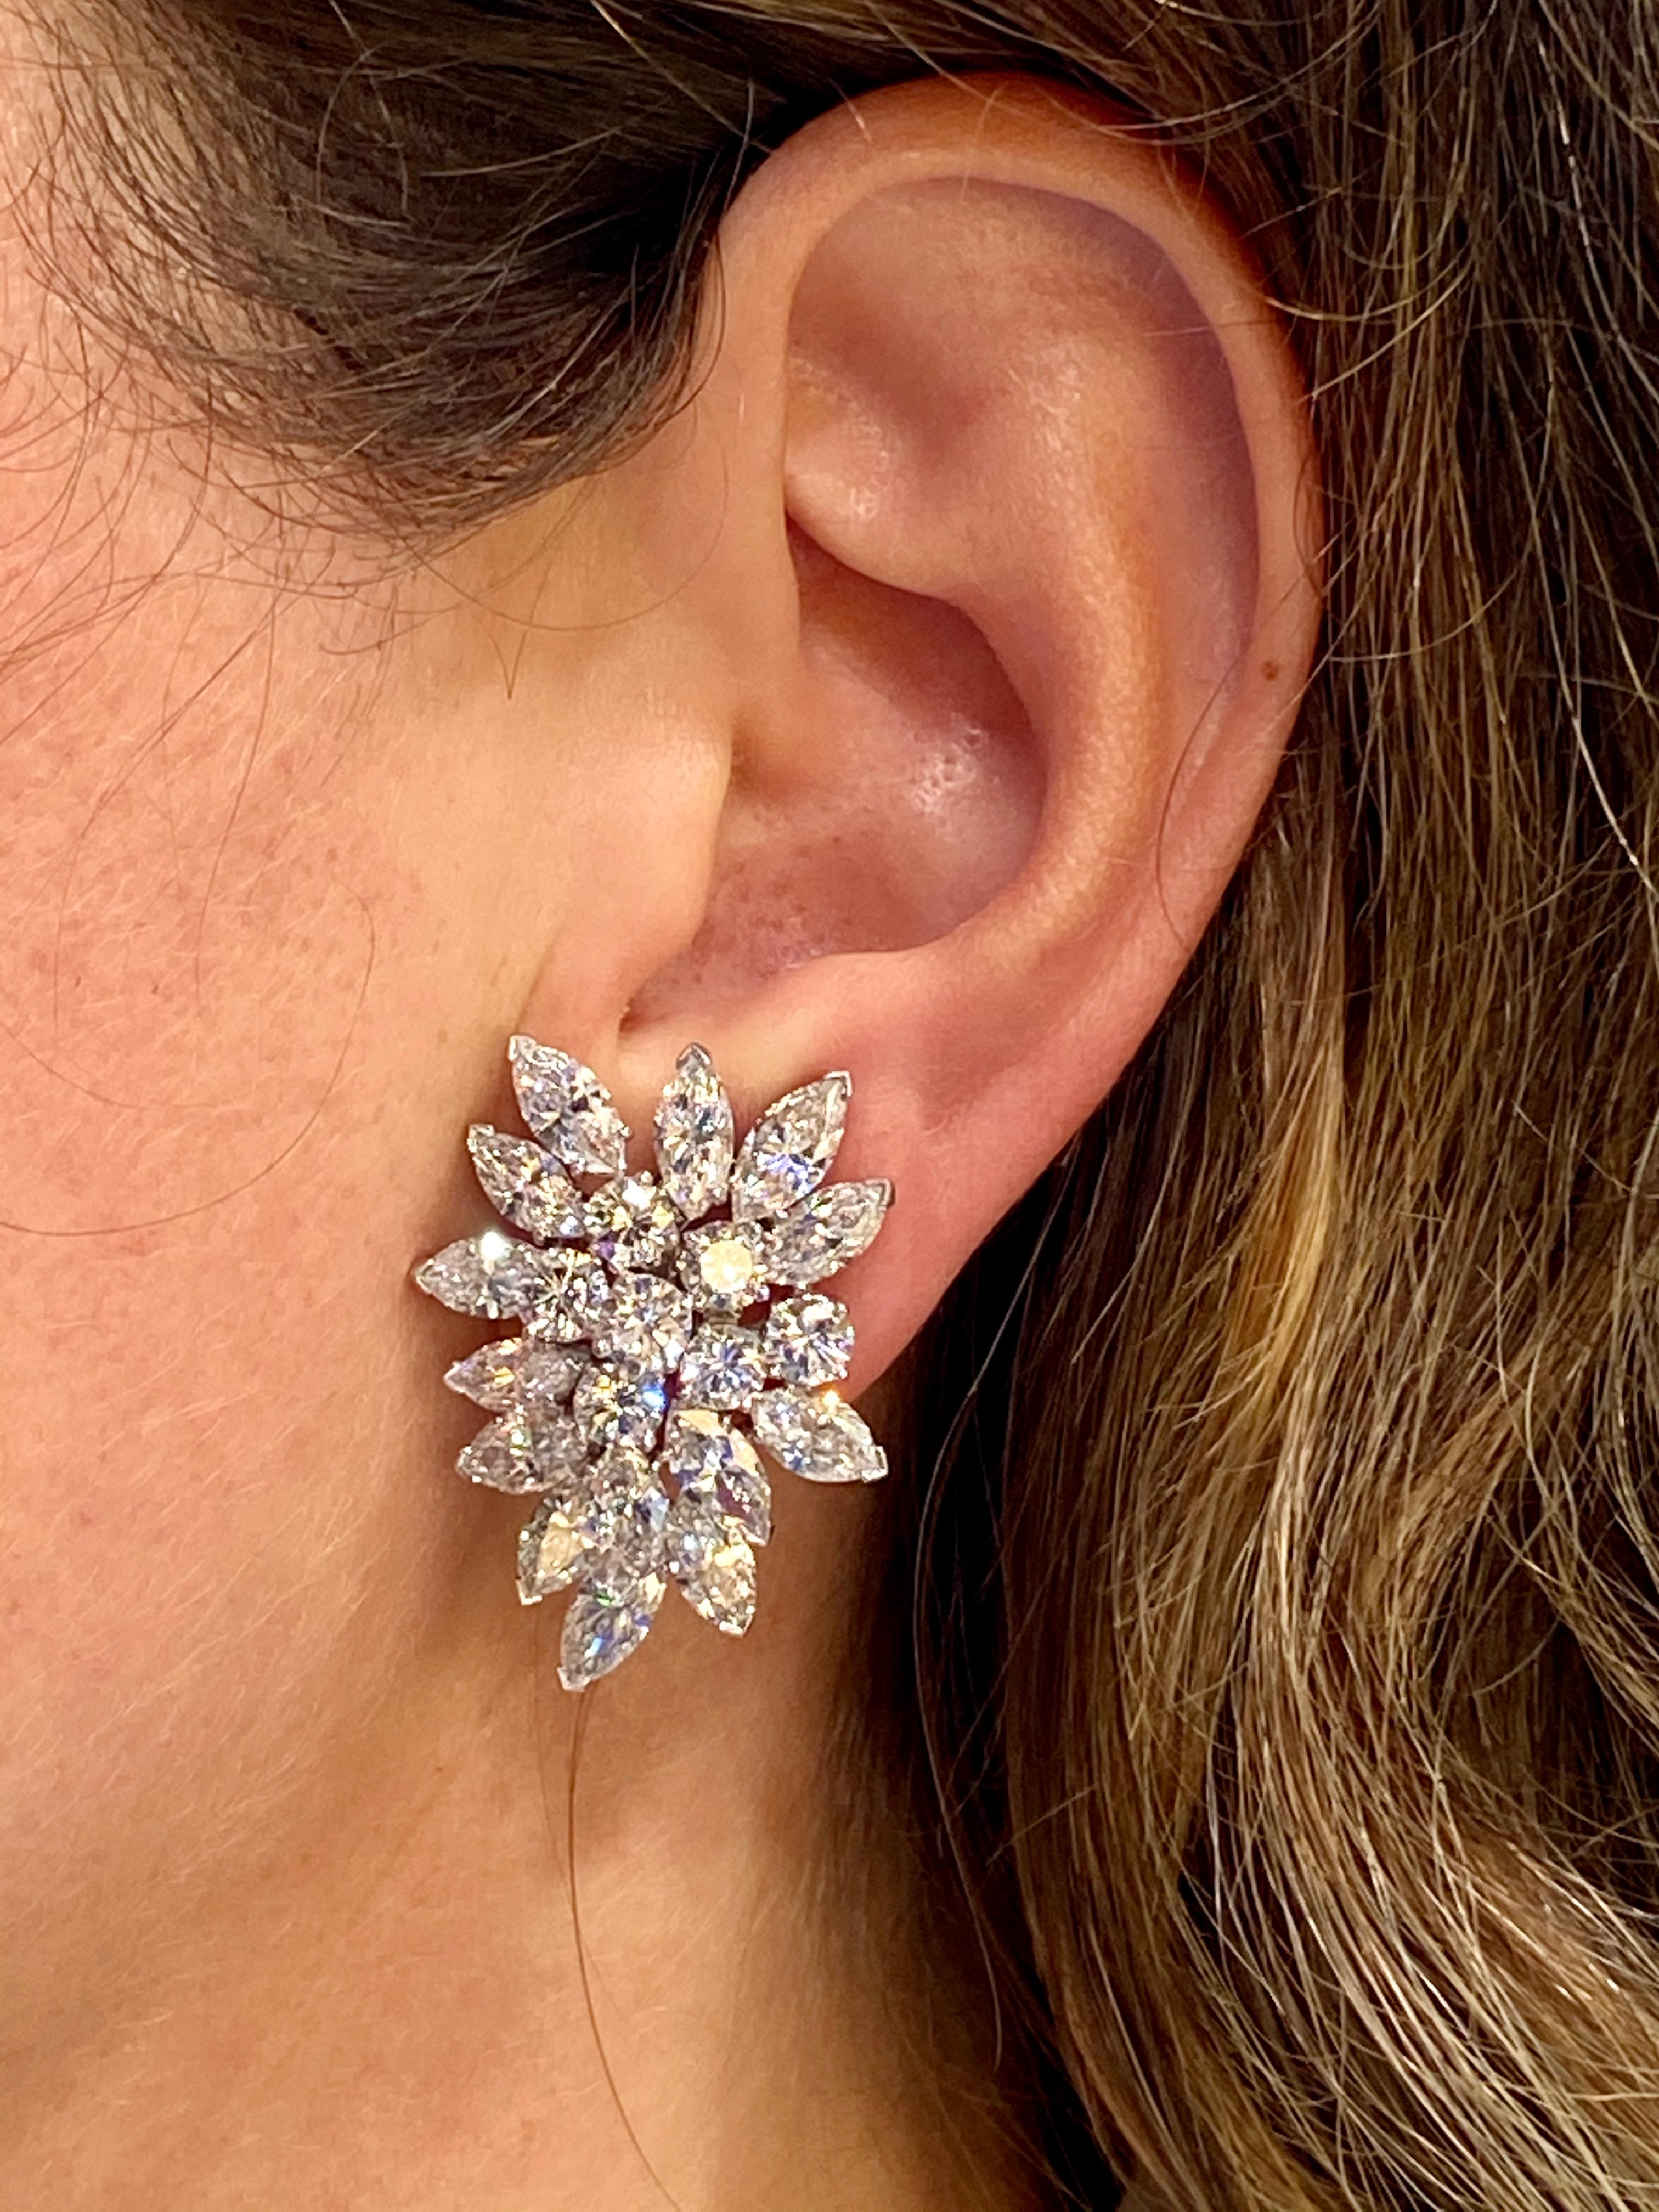 Camborne Earrings - Diamond, Sapphire, and Platinum Earrings